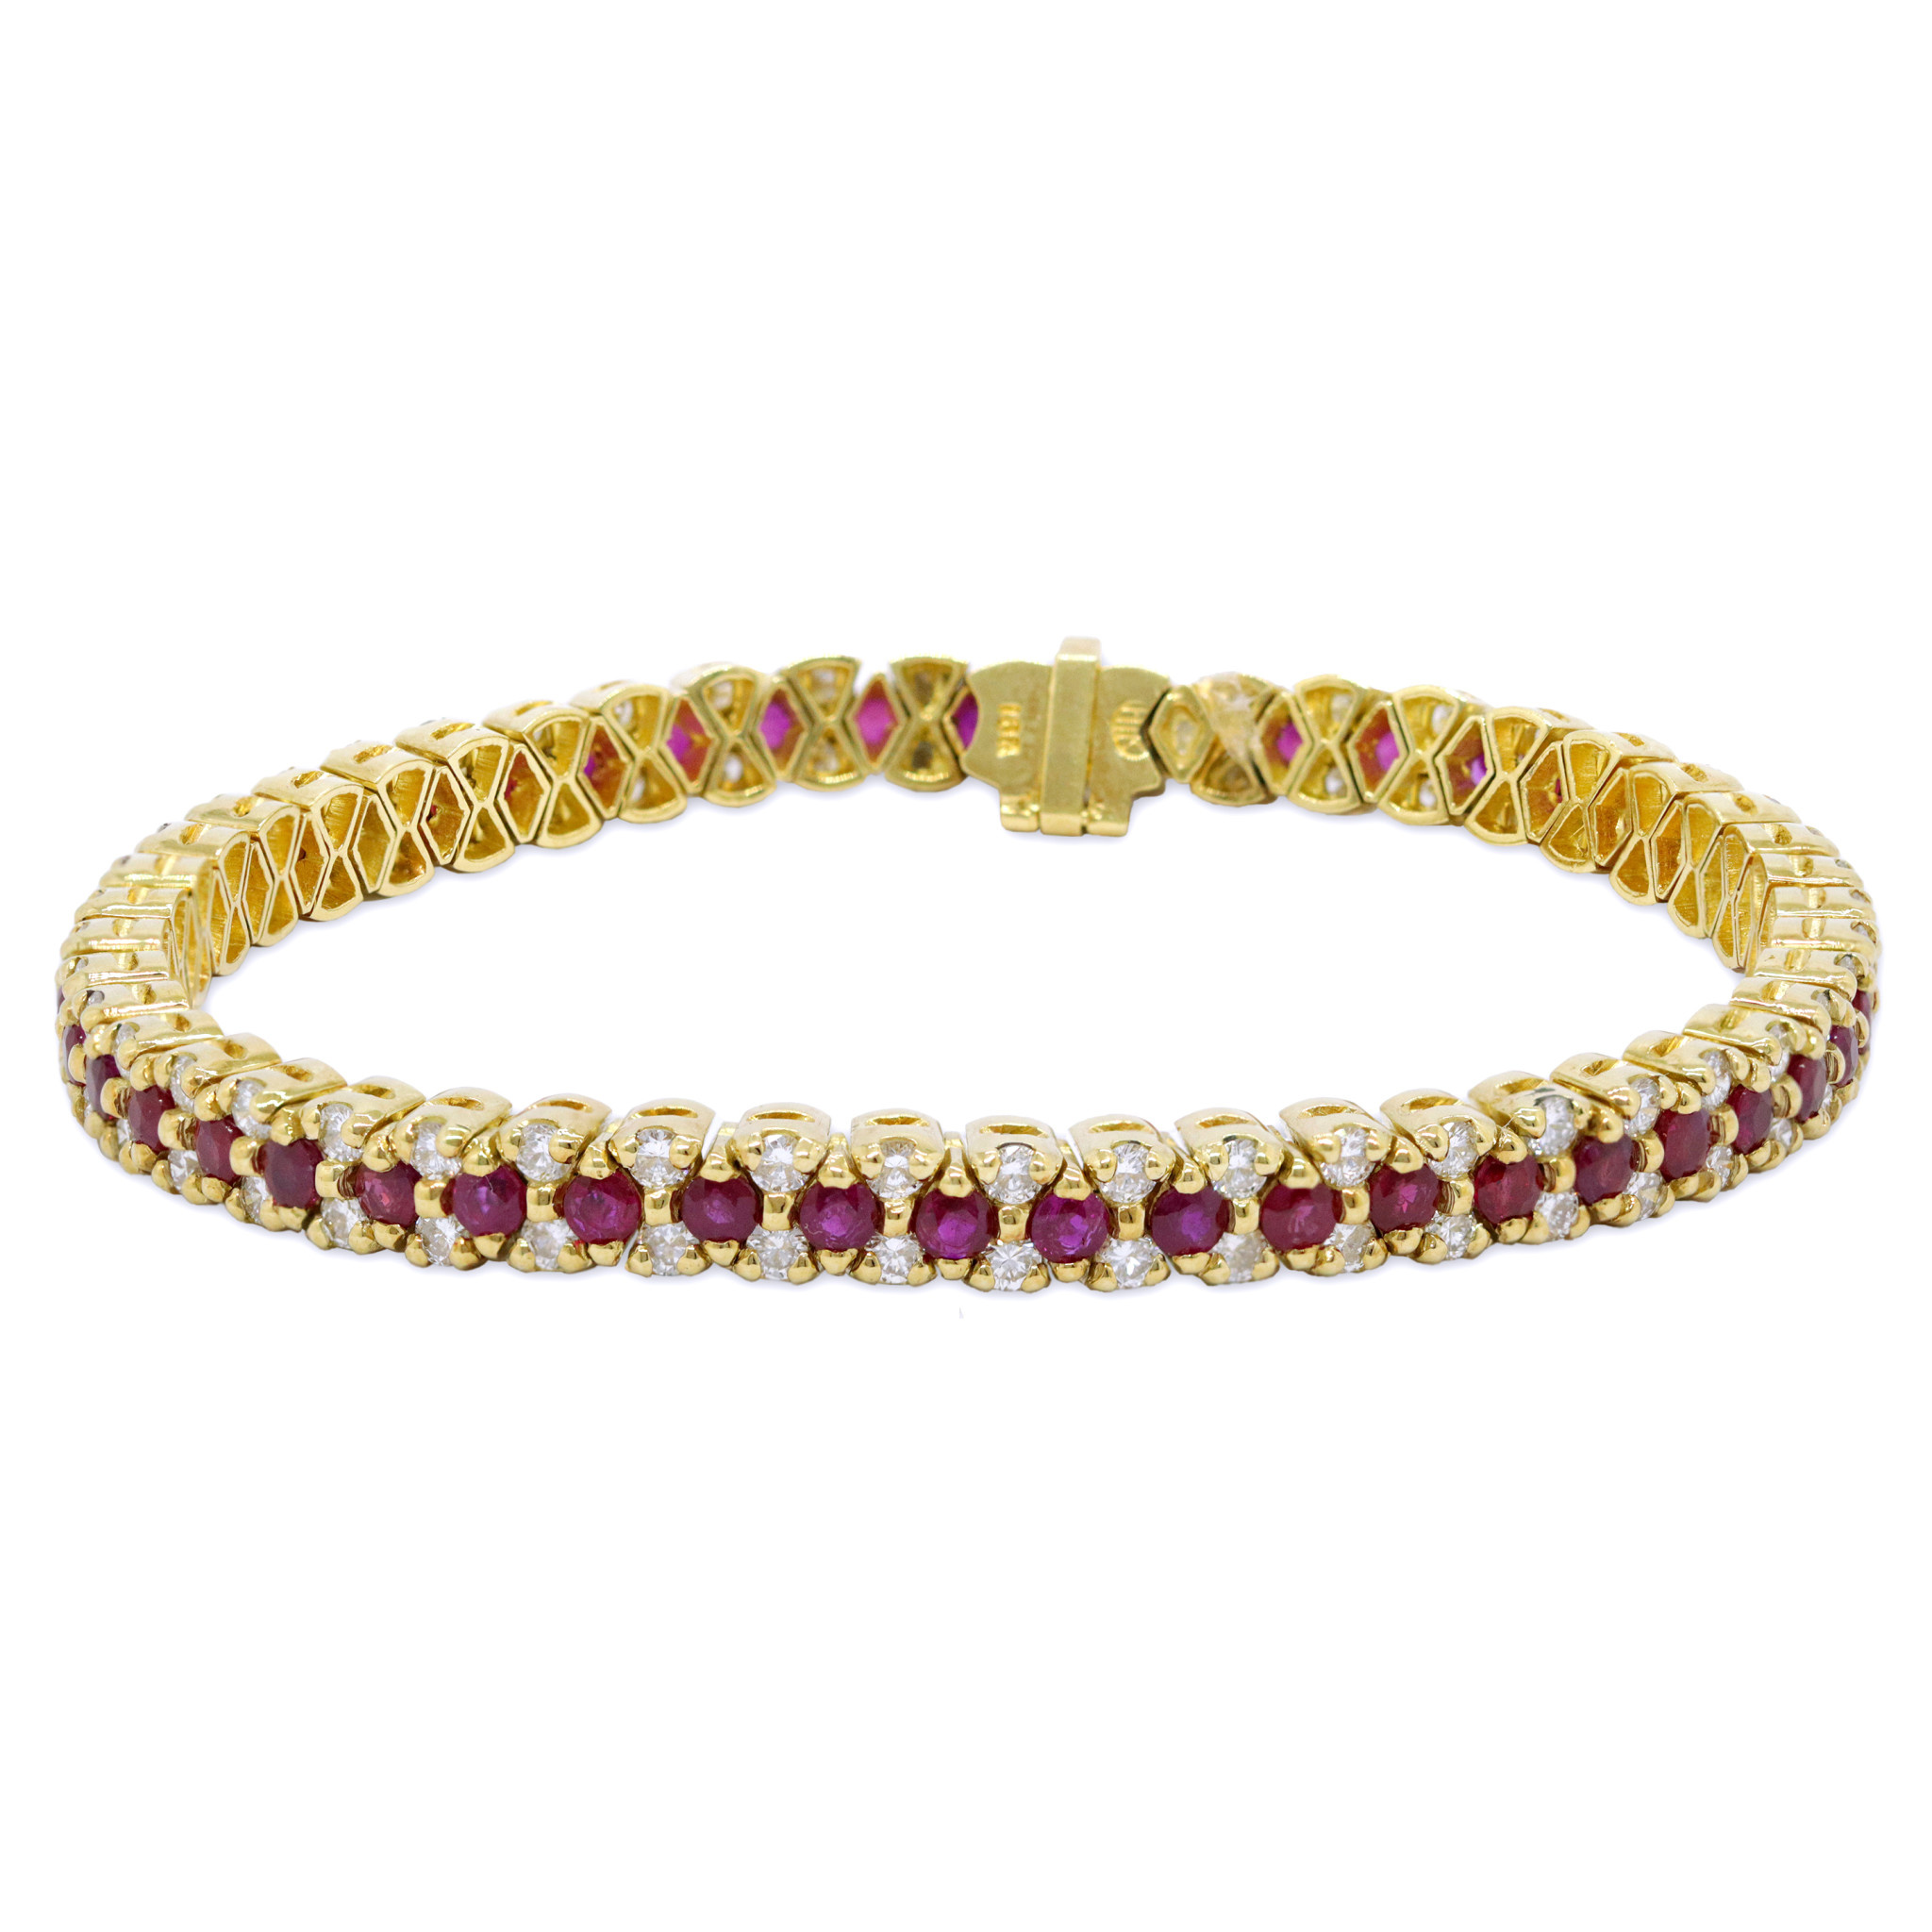 Buy Ruby Bangles Online | BlueStone.com - India's #1 Online Jewellery Brand